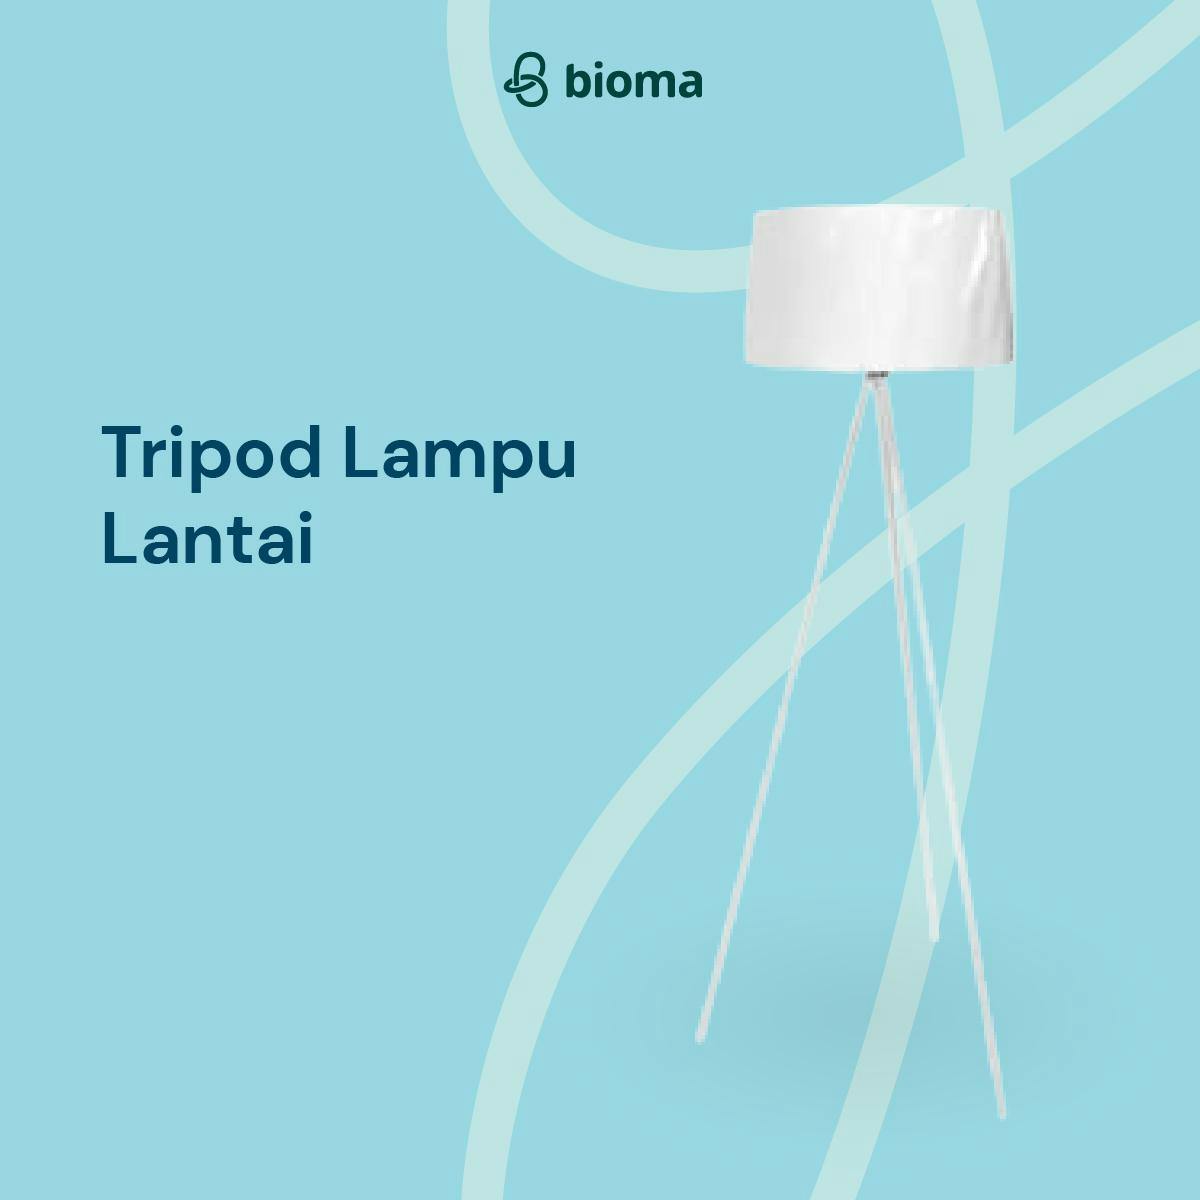 Image 433 Tripod Lampu Lantai